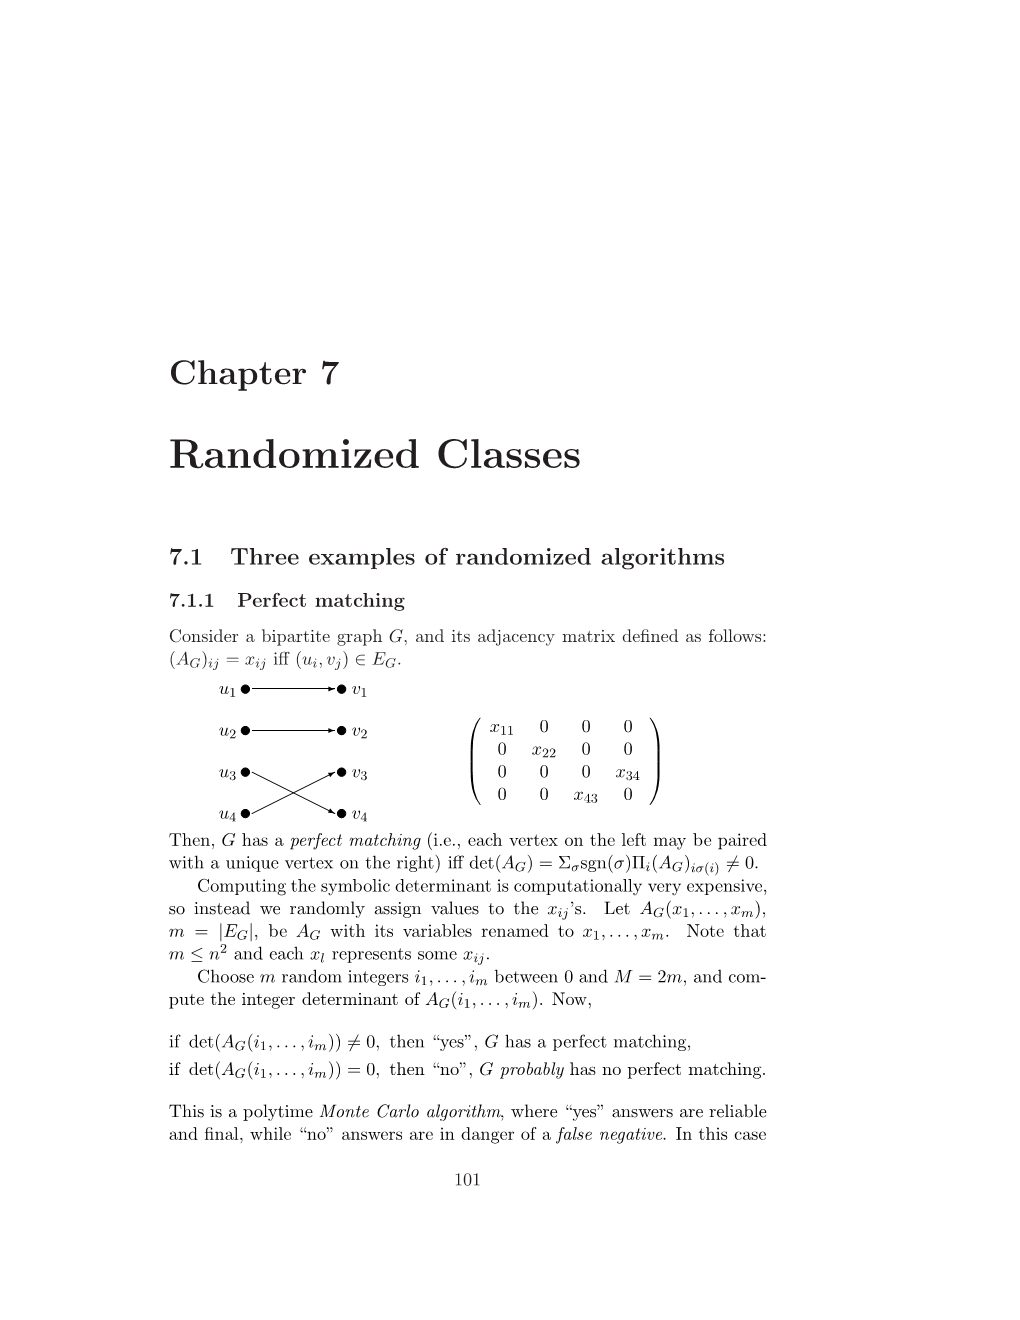 Randomized Classes